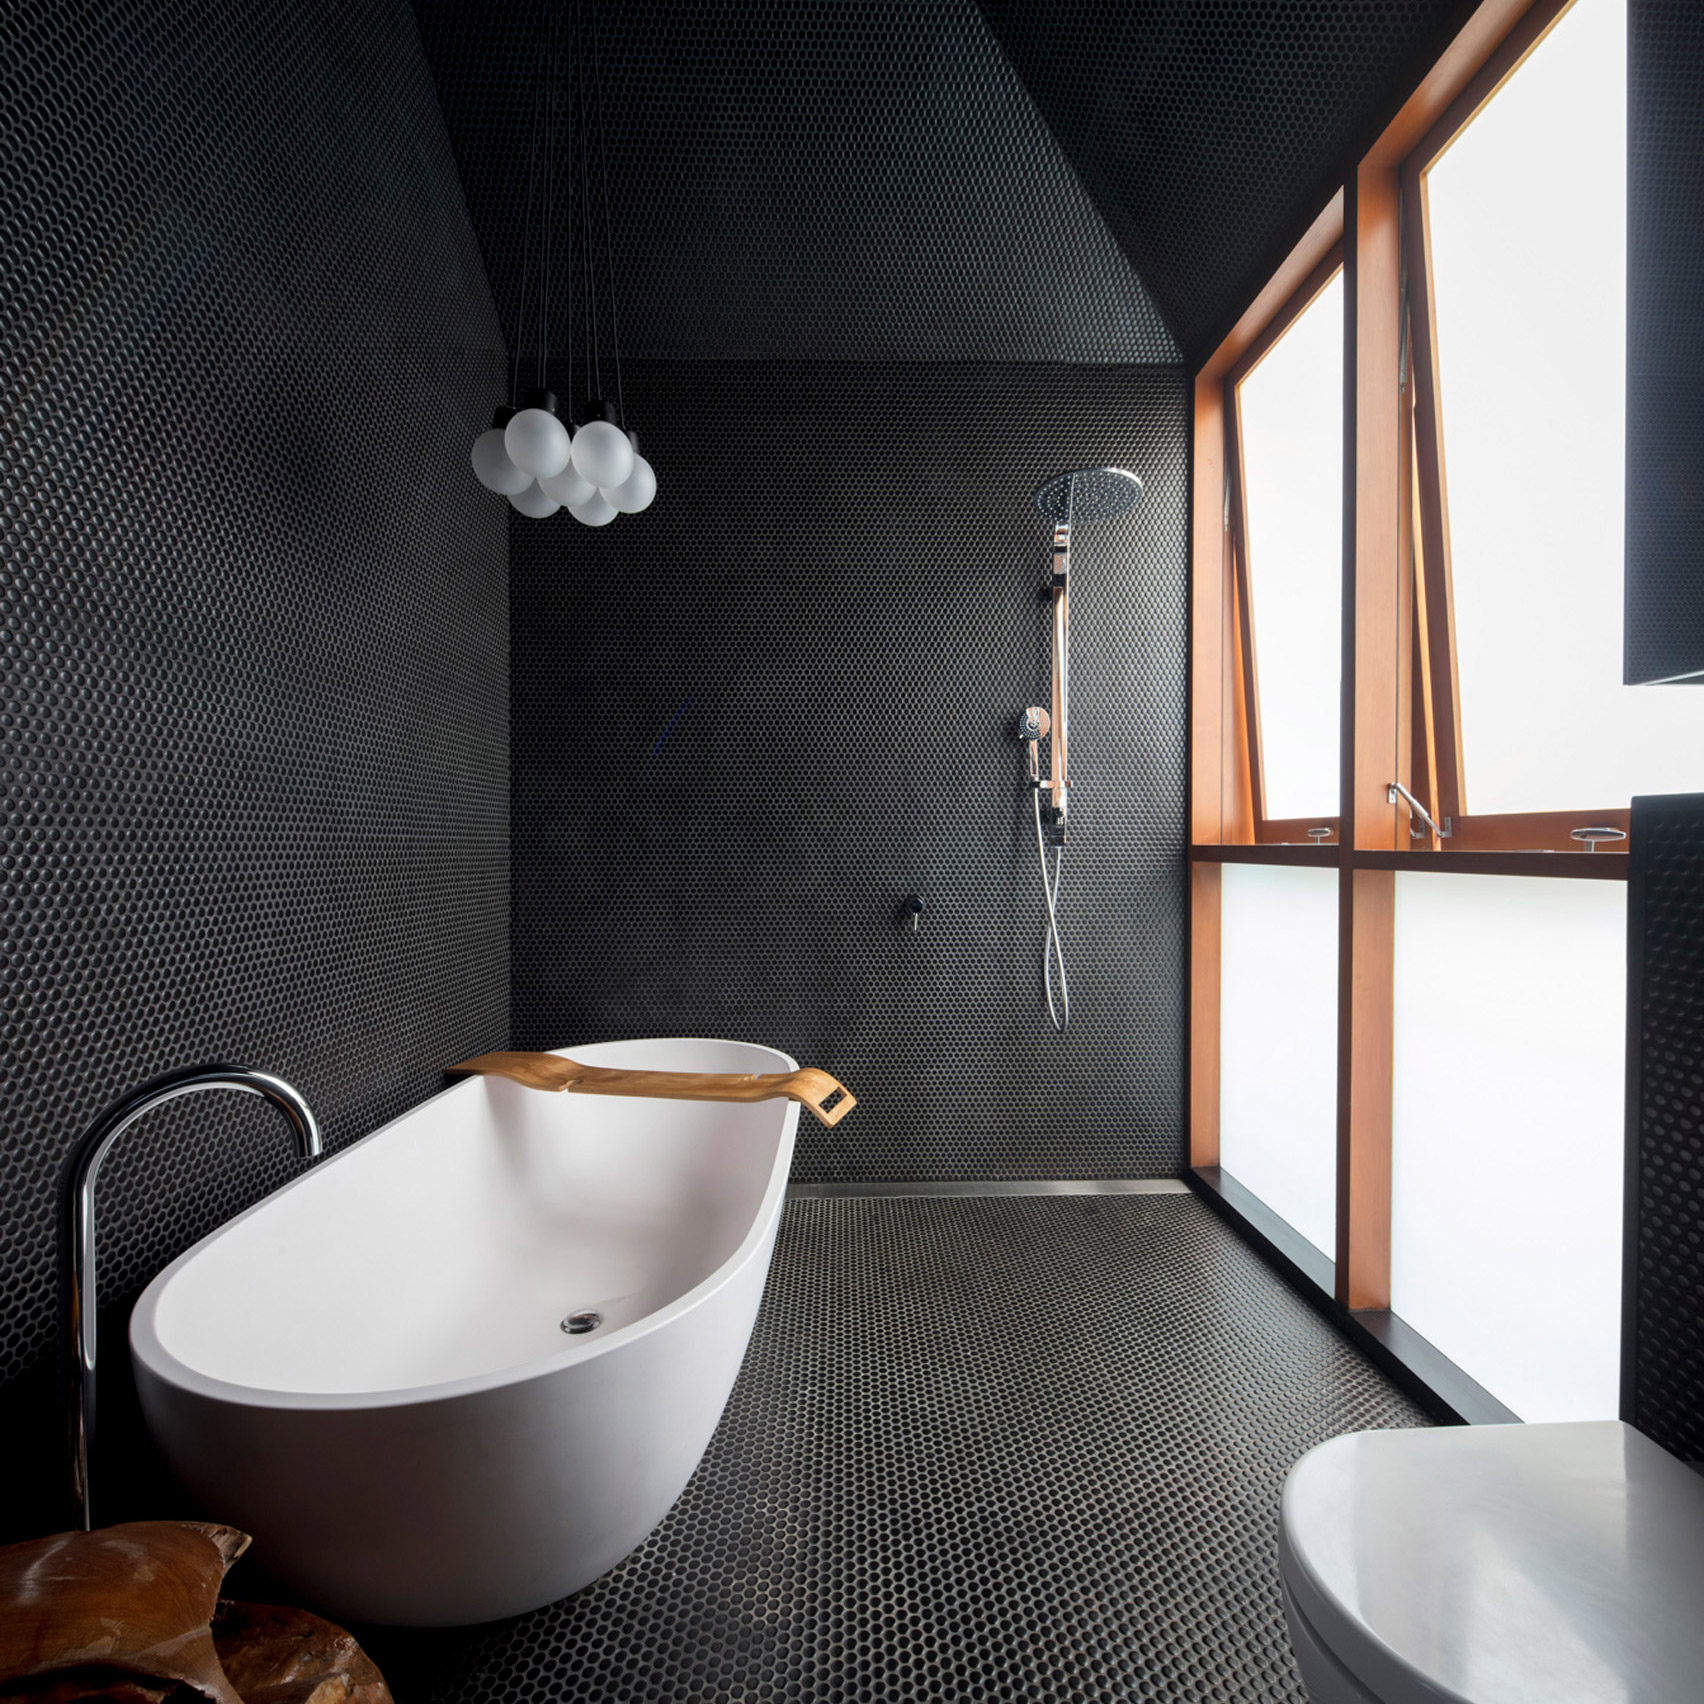 Black-tiled bathroom with freestanding bath